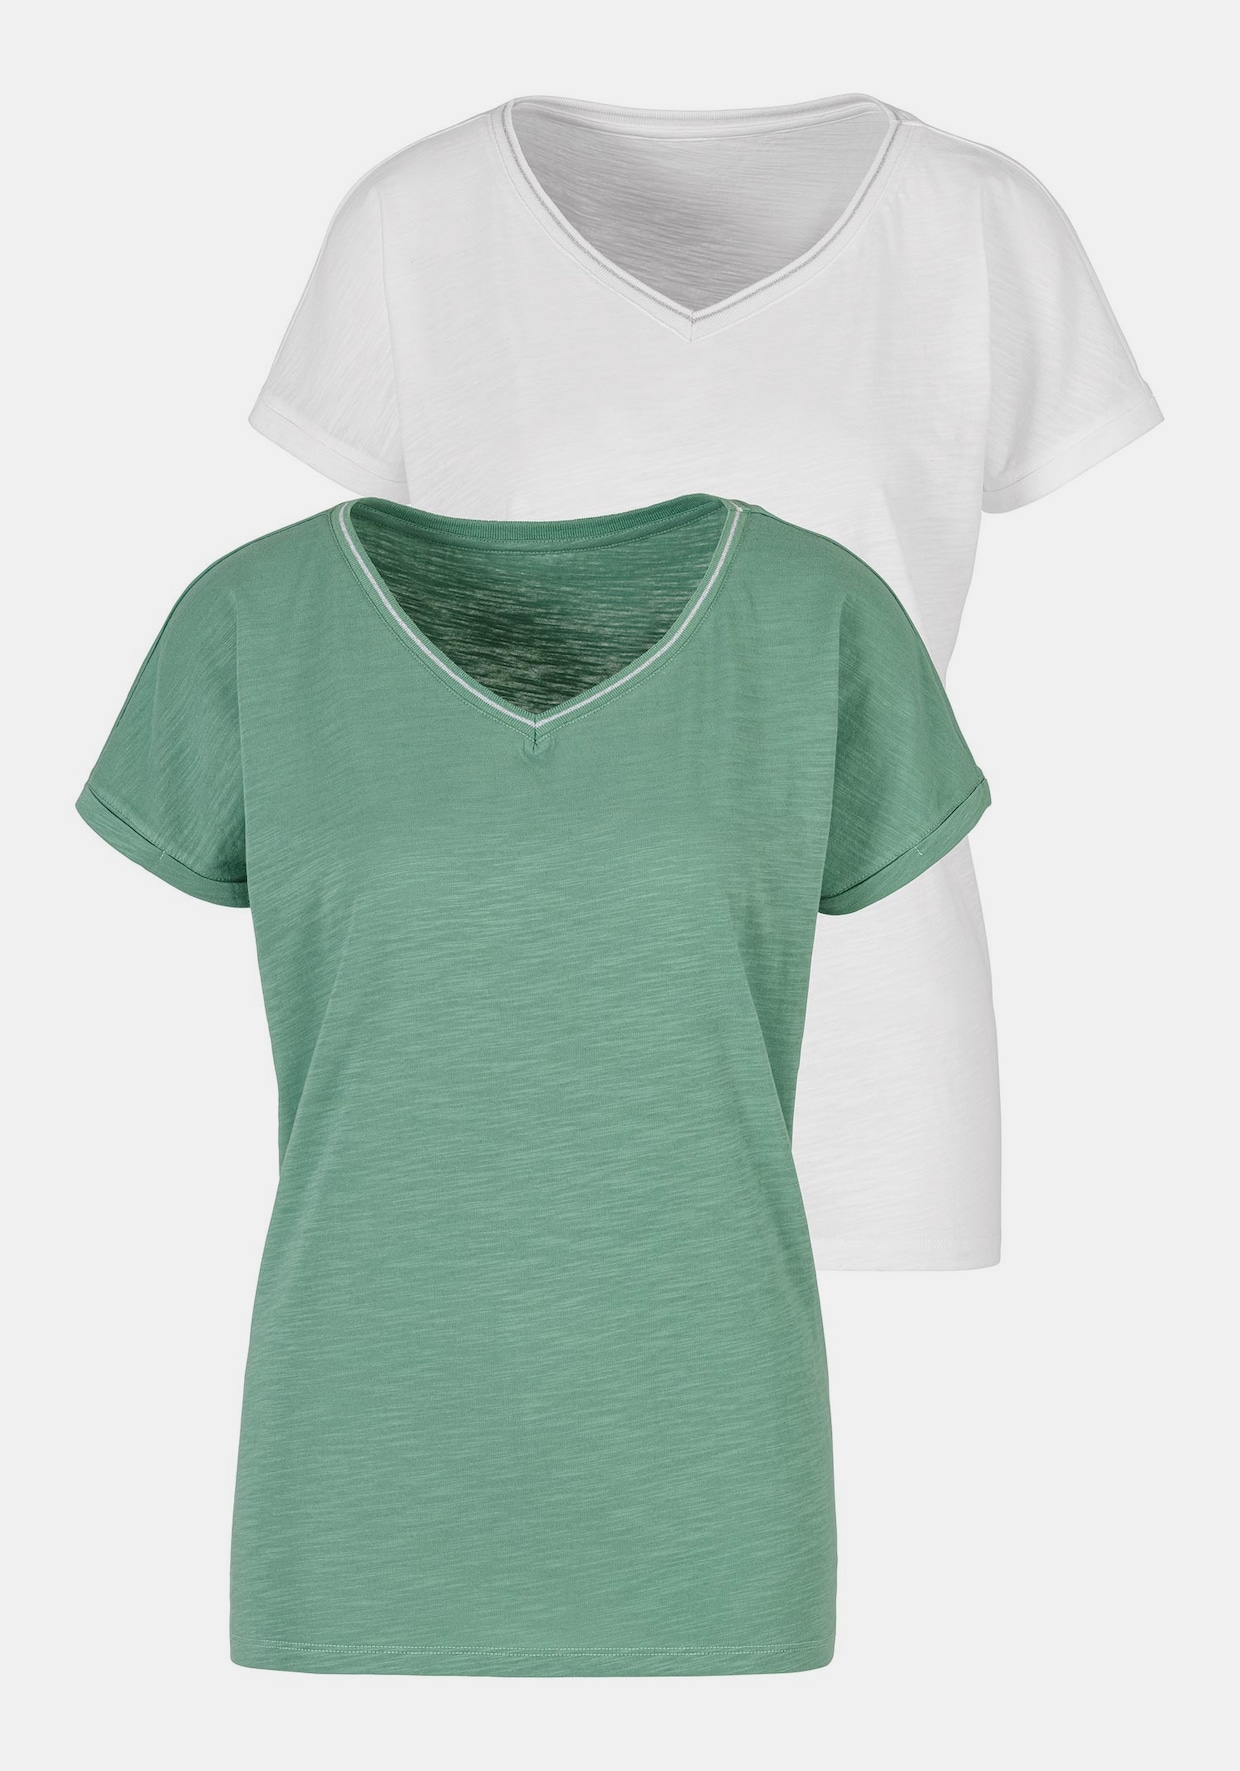 H.I.S T-Shirt - 1x mint + 1x creme